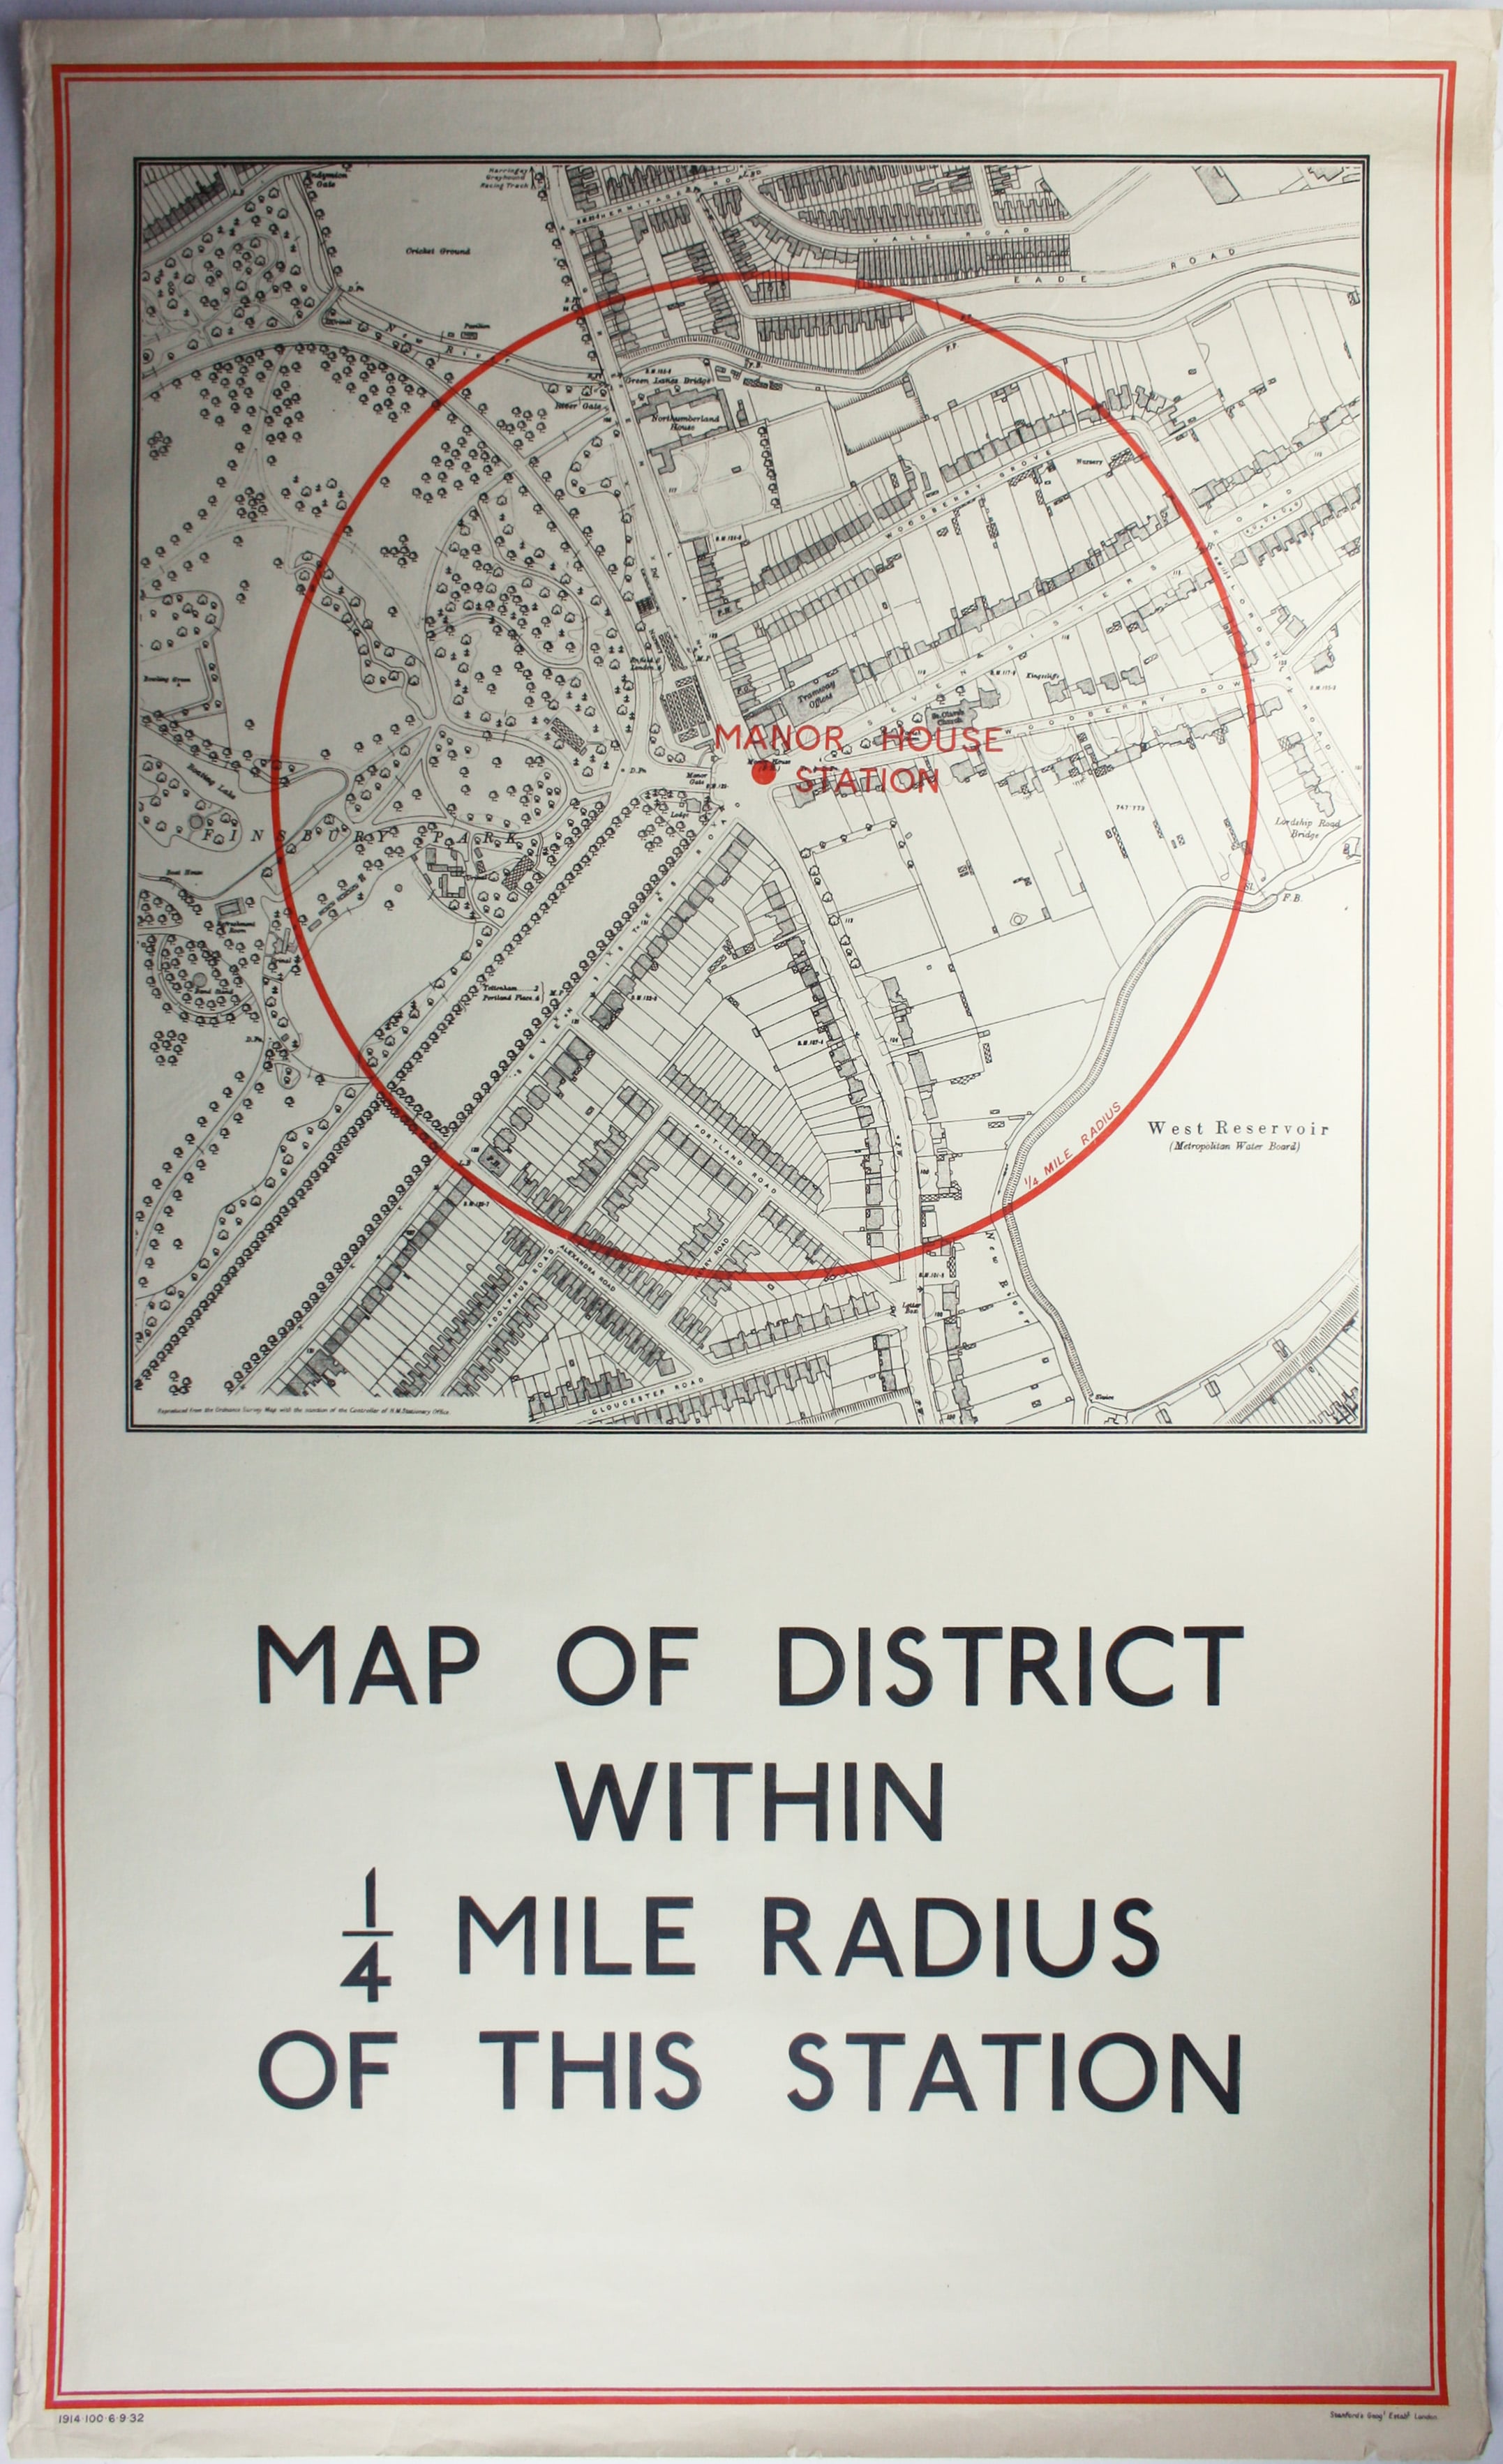 Quarter Mile Radius Map of Manor House Station